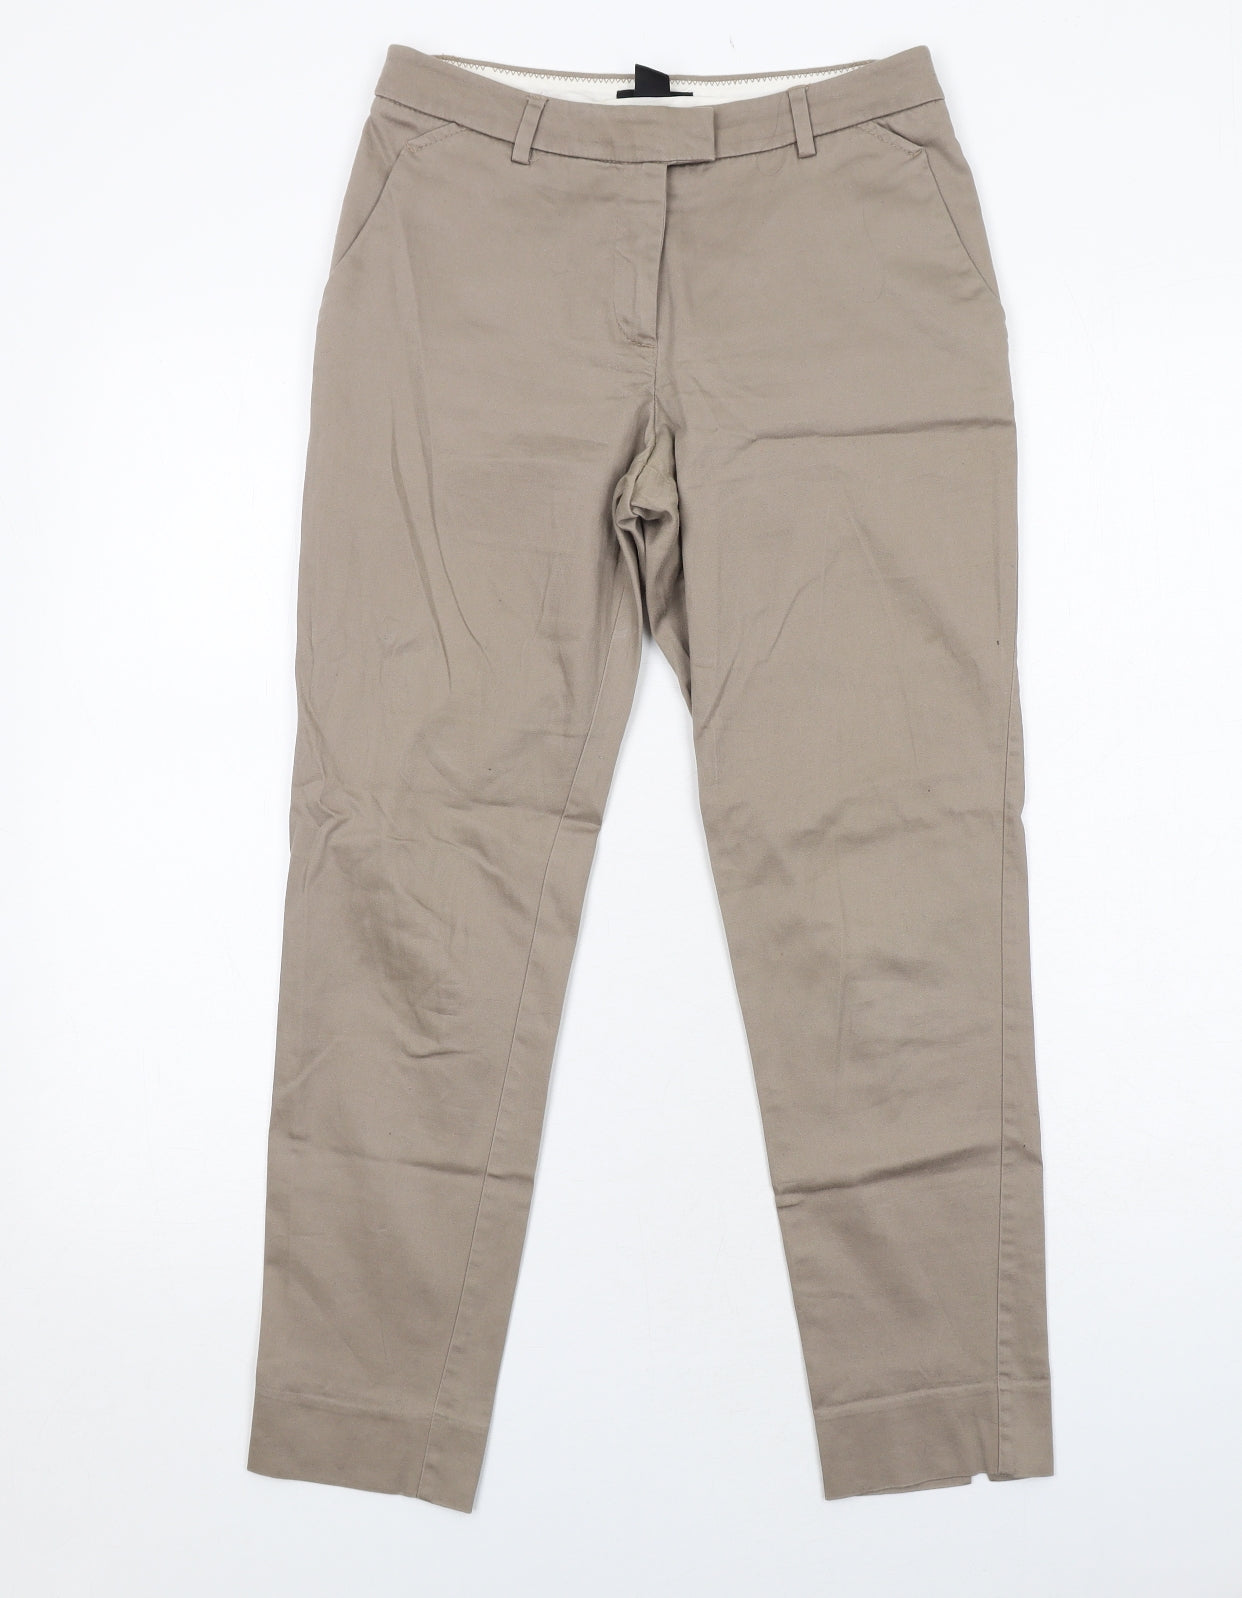 H&M Womens Brown Cotton Carrot Trousers Size 6 Regular Zip